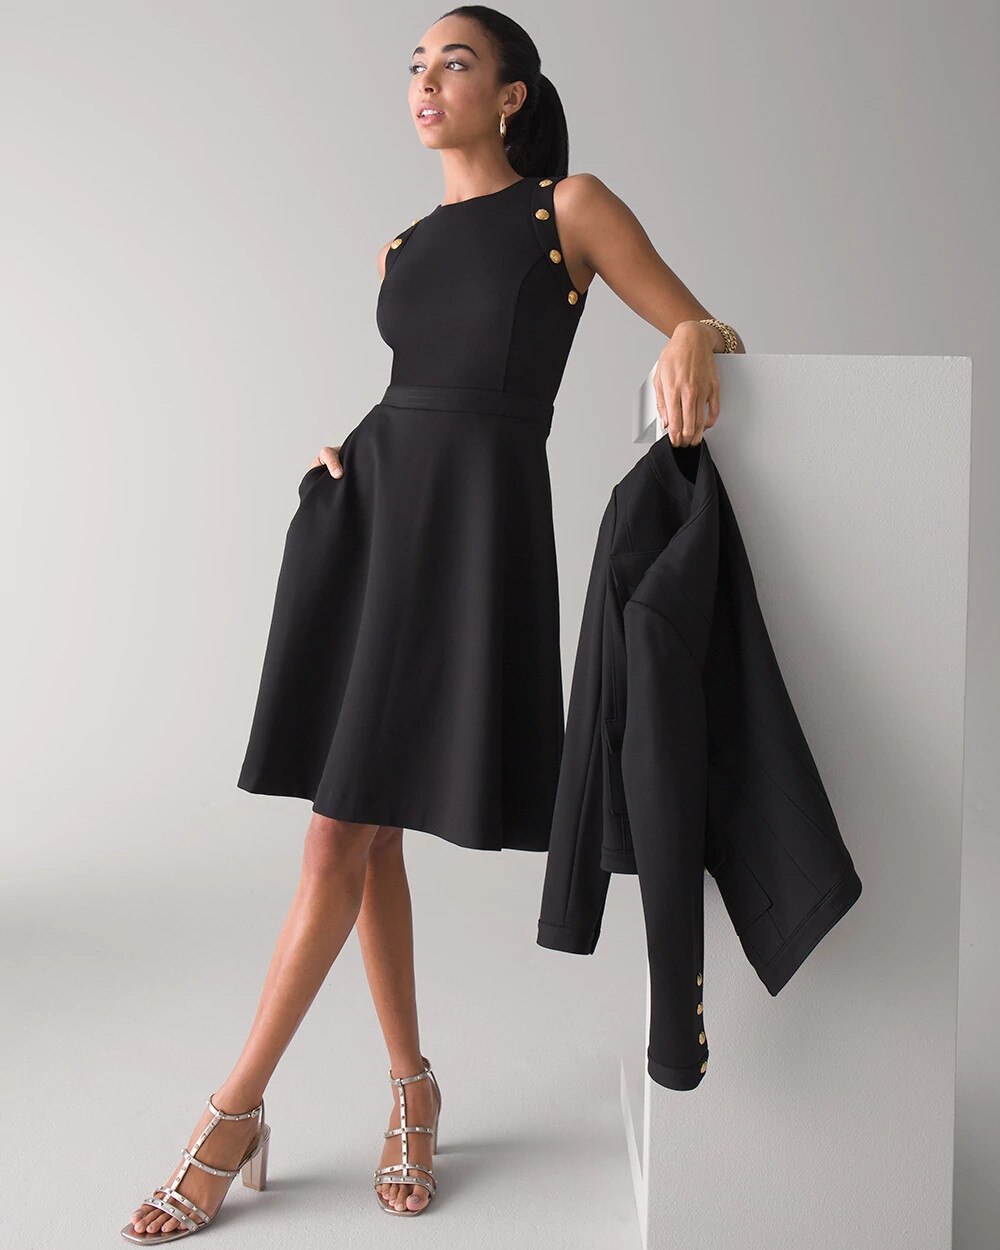 fitting black dress